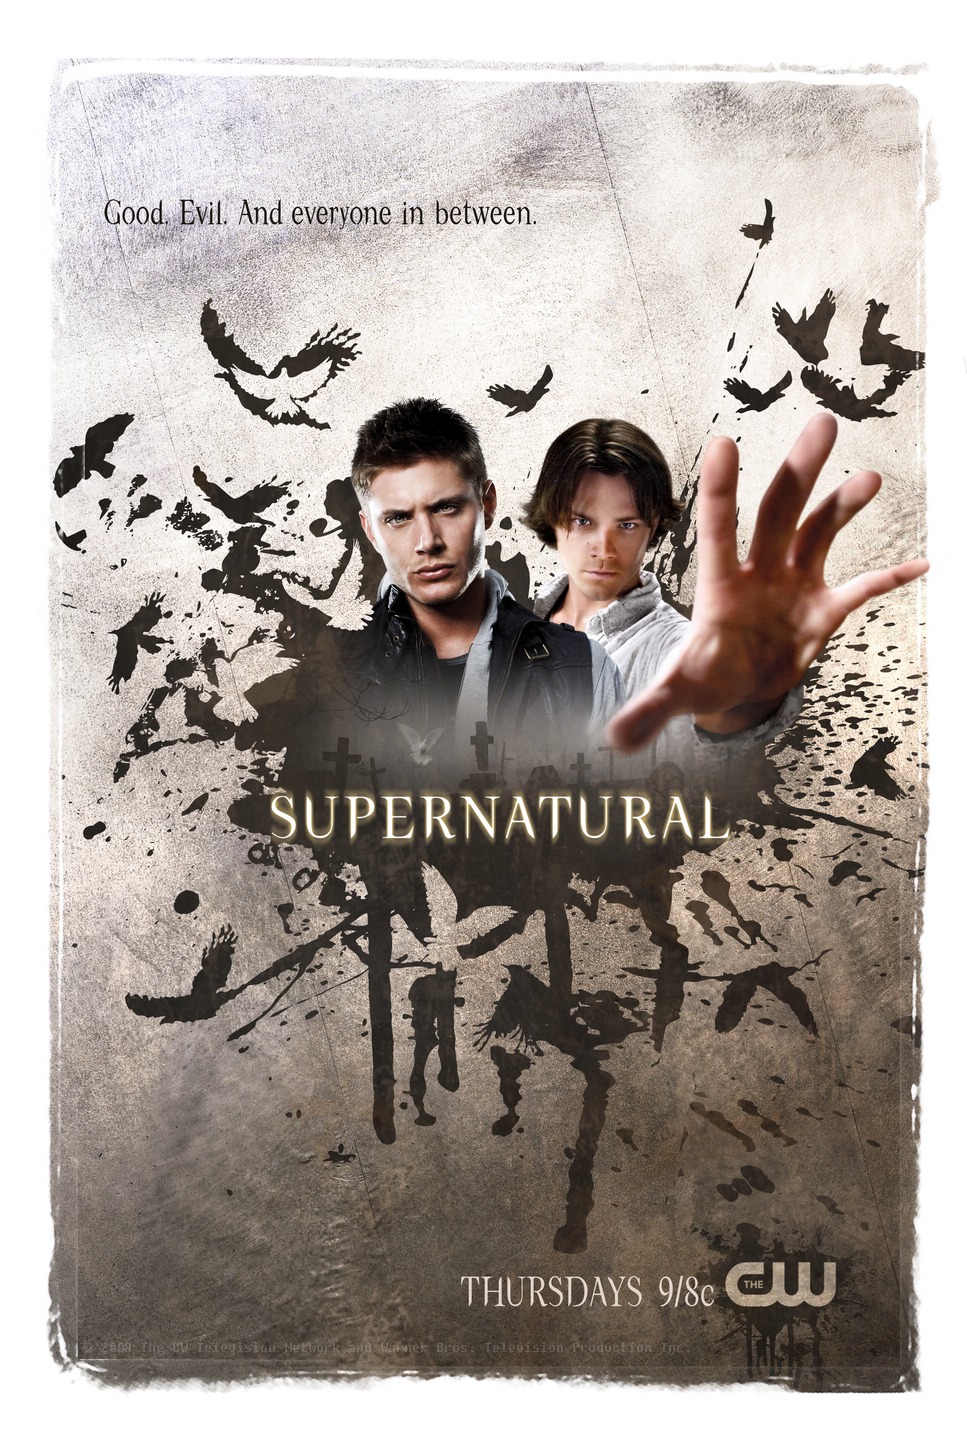 http://tvmediablog.files.wordpress.com/2008/11/supernatural-temporada-4-poster.jpg